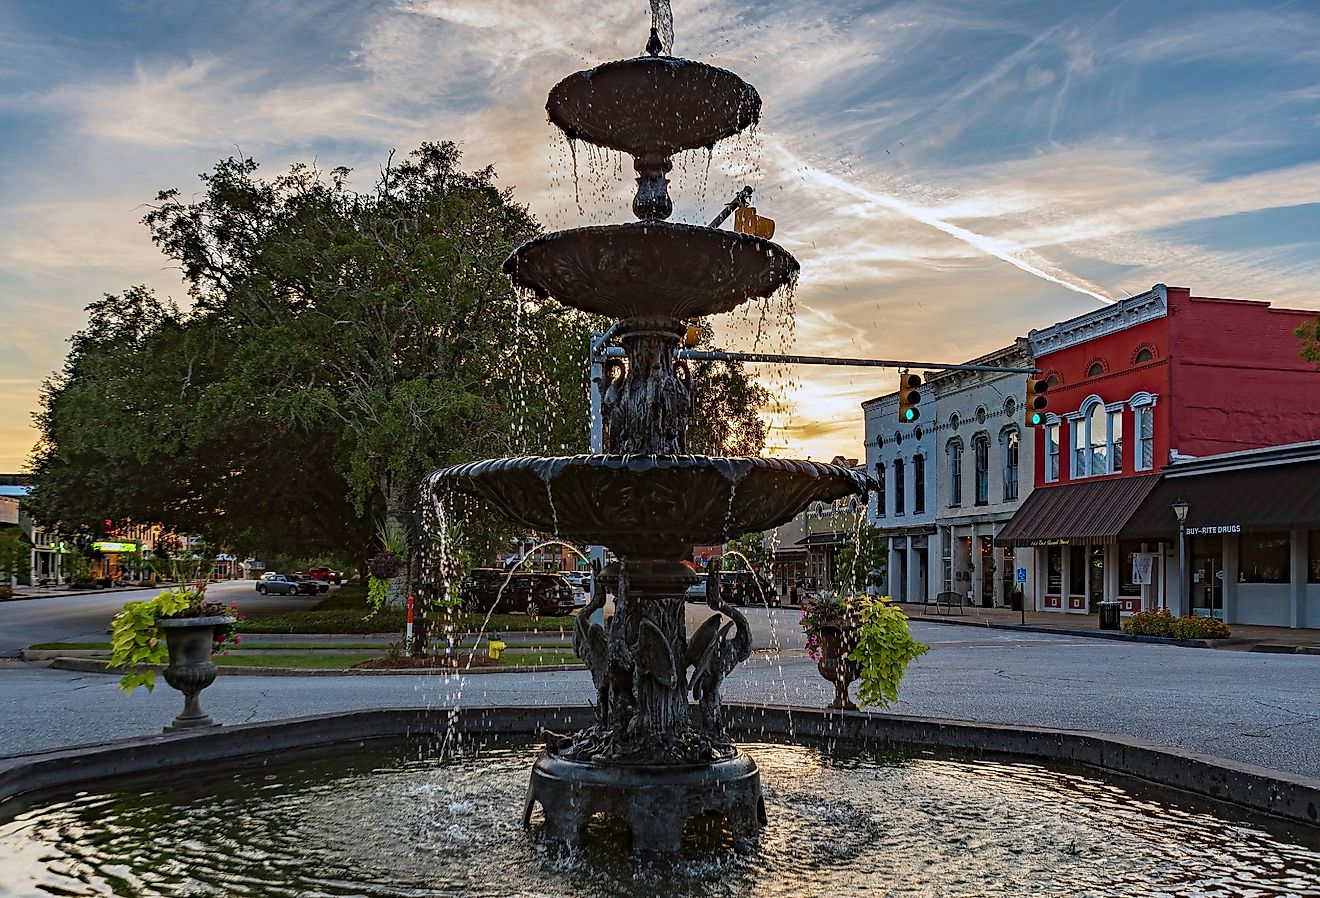 MacMonnie's Fountain in downtown Eufaula, Alabama. Image credit JNix via Shutterstock